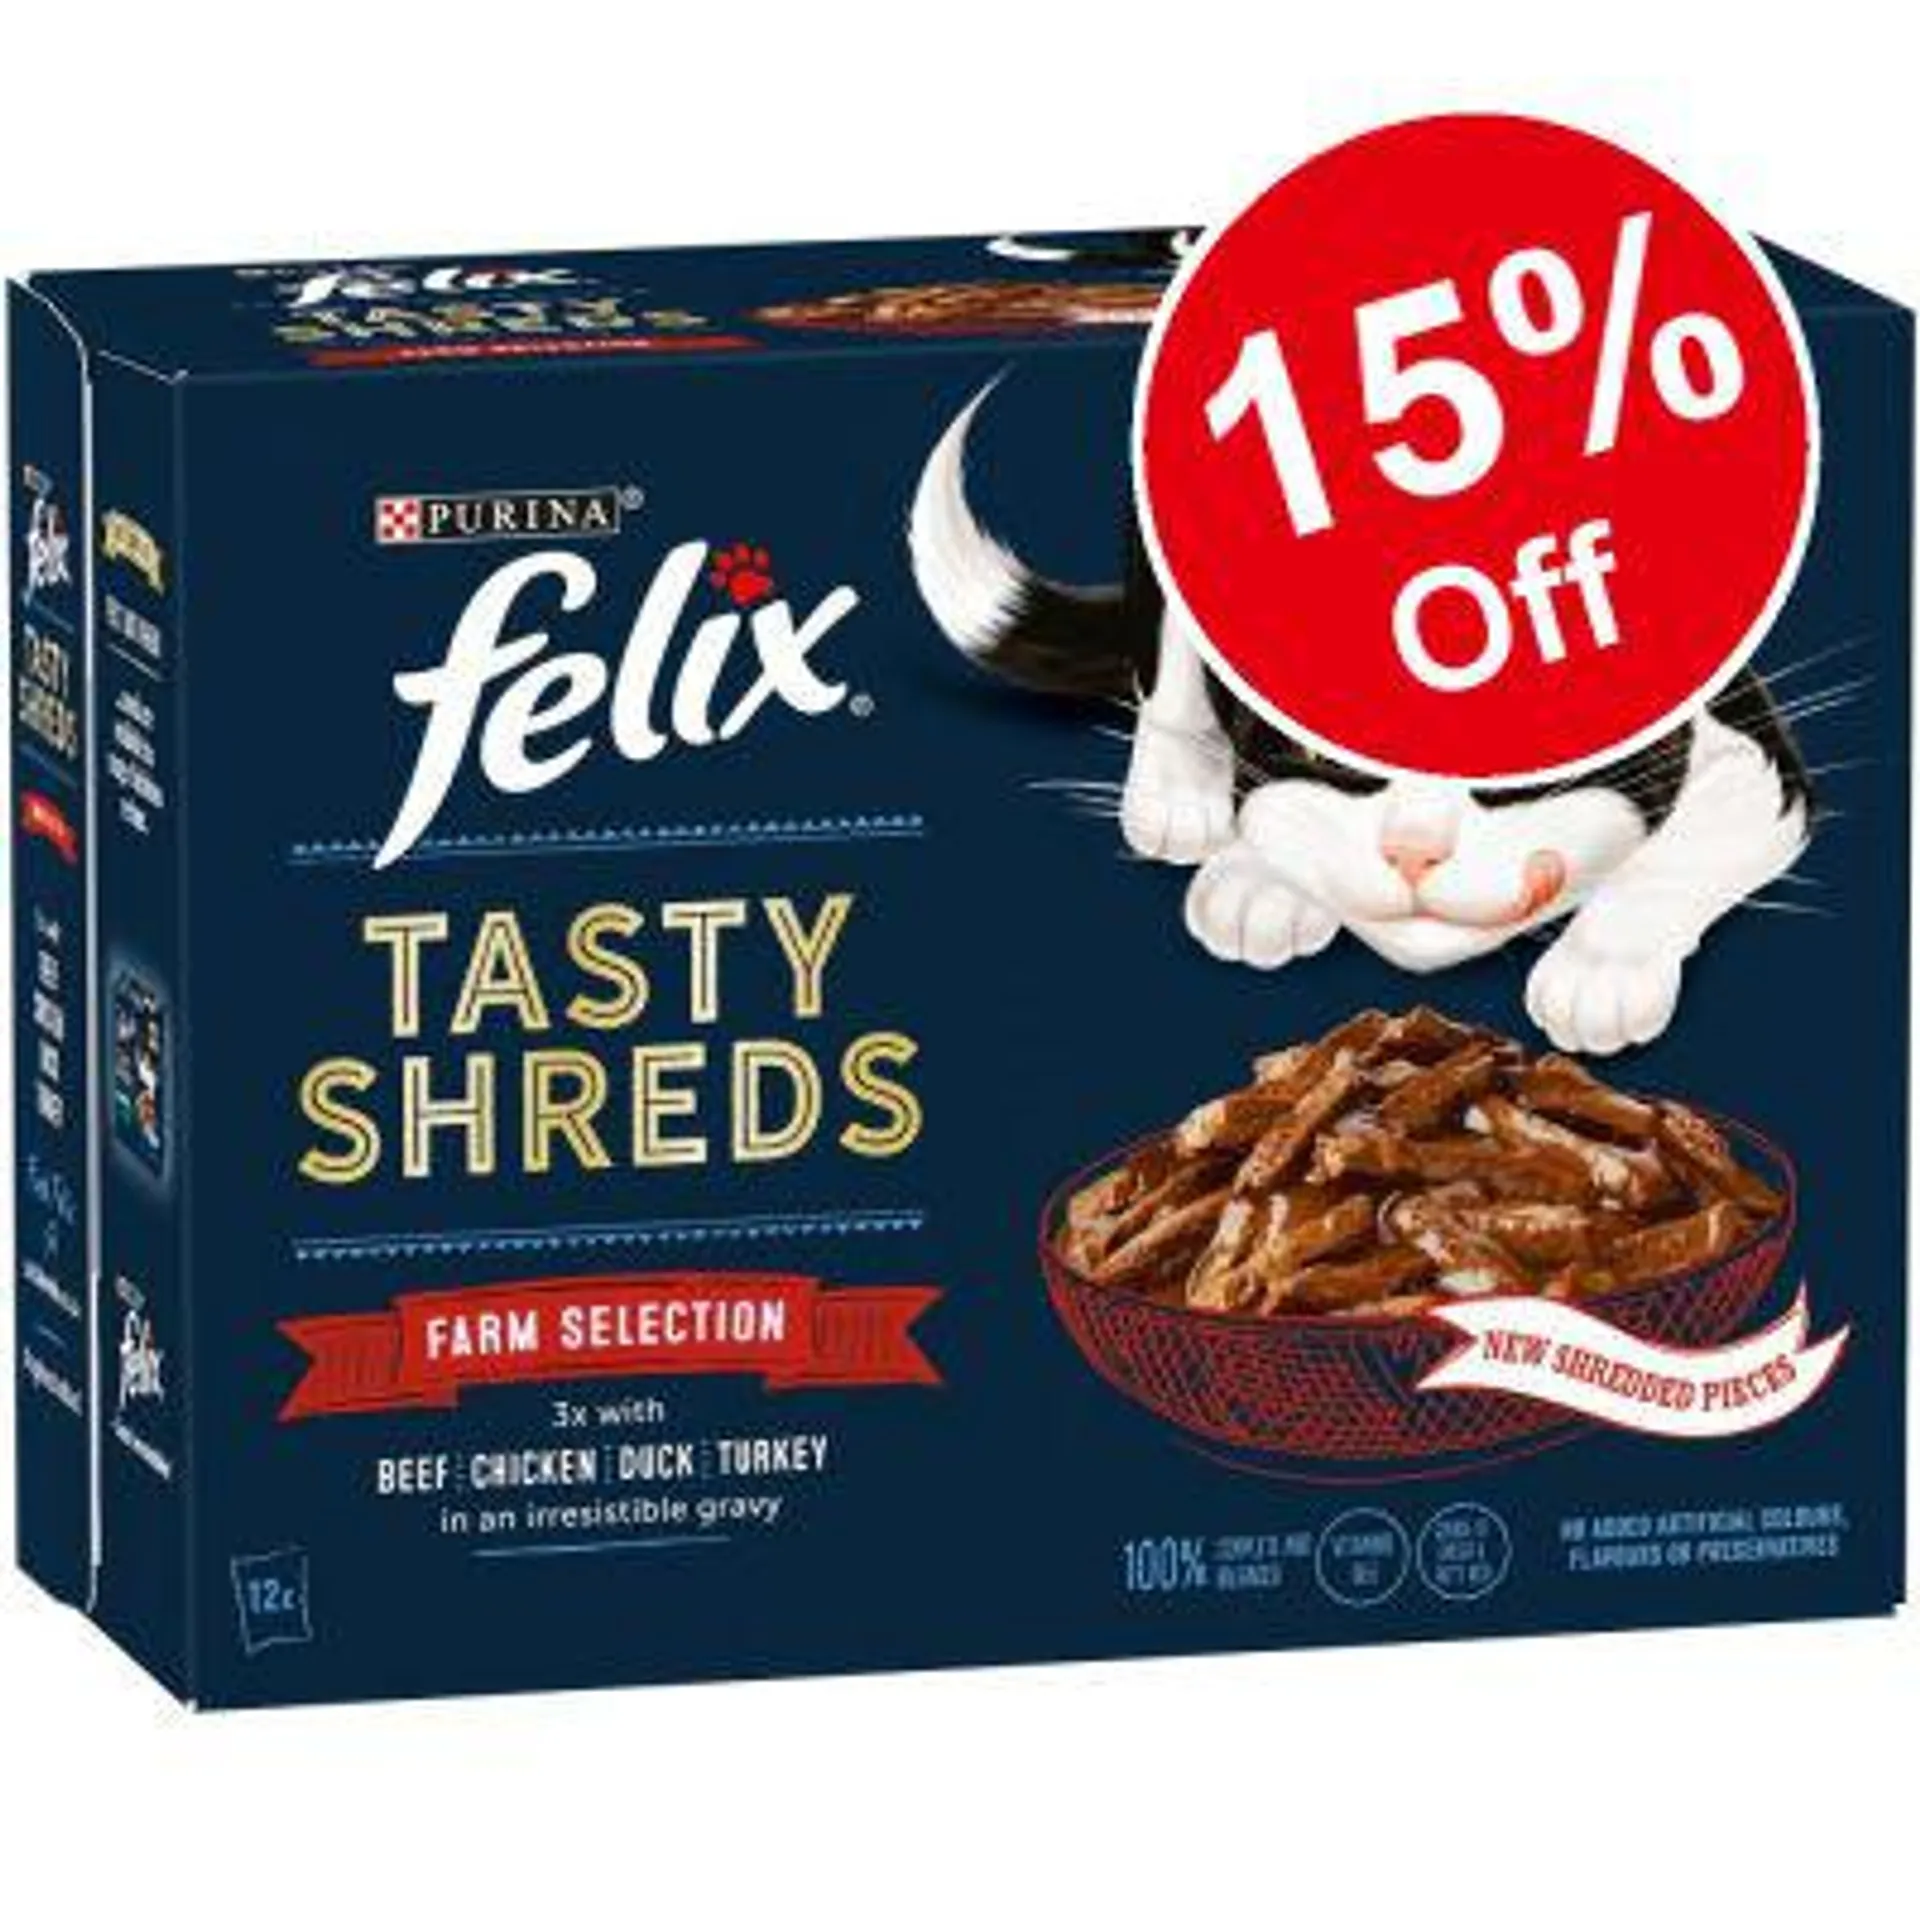 Felix Tasty Shreds Wet Cat Food - 15% Off!*